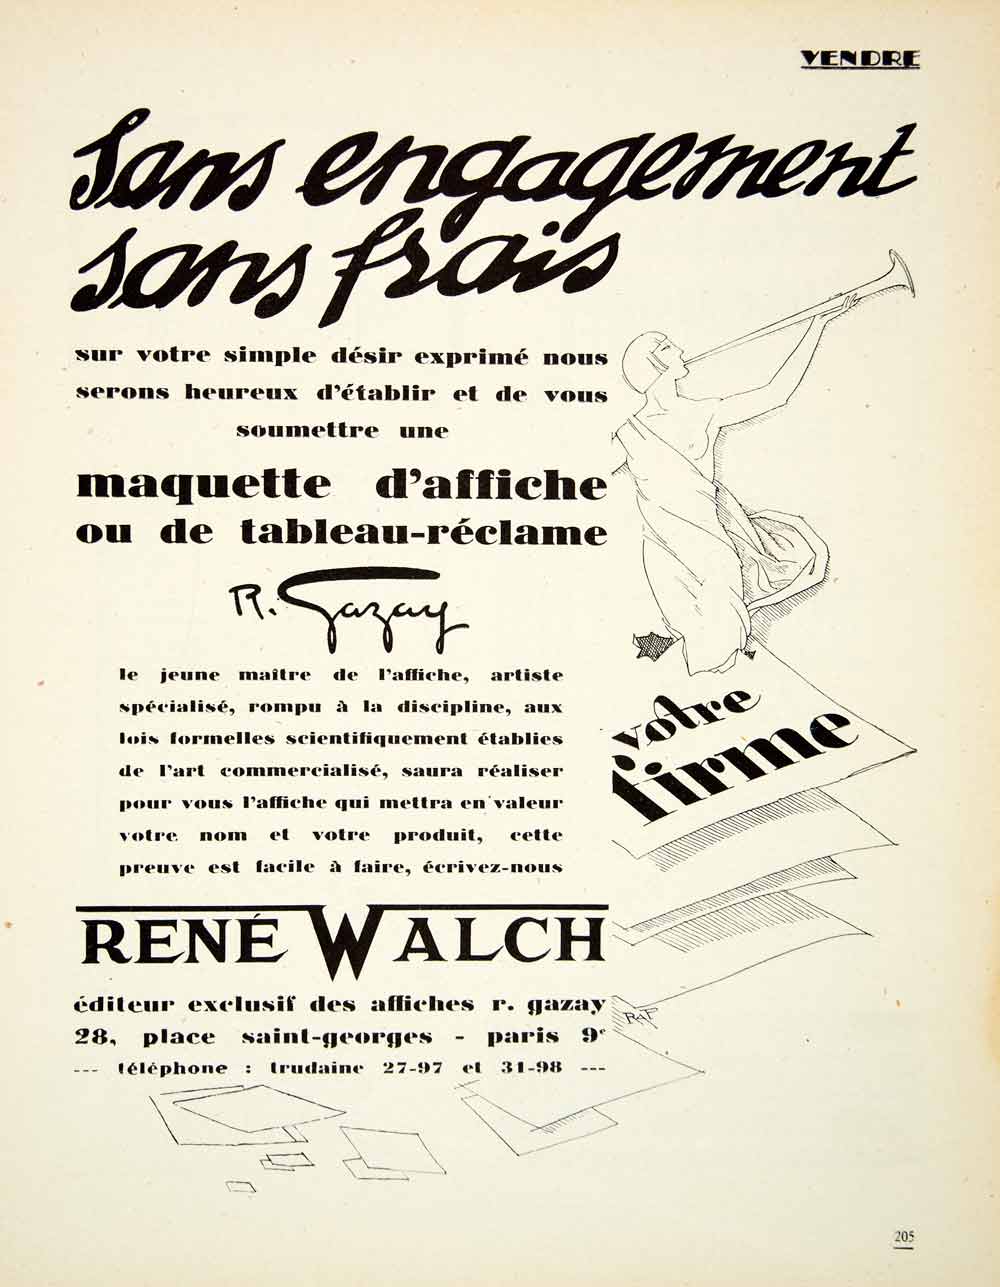 1926 Ad Rene Walch R Gazay 28 Place Saint-Georges Paris Advertising Agency VENA3